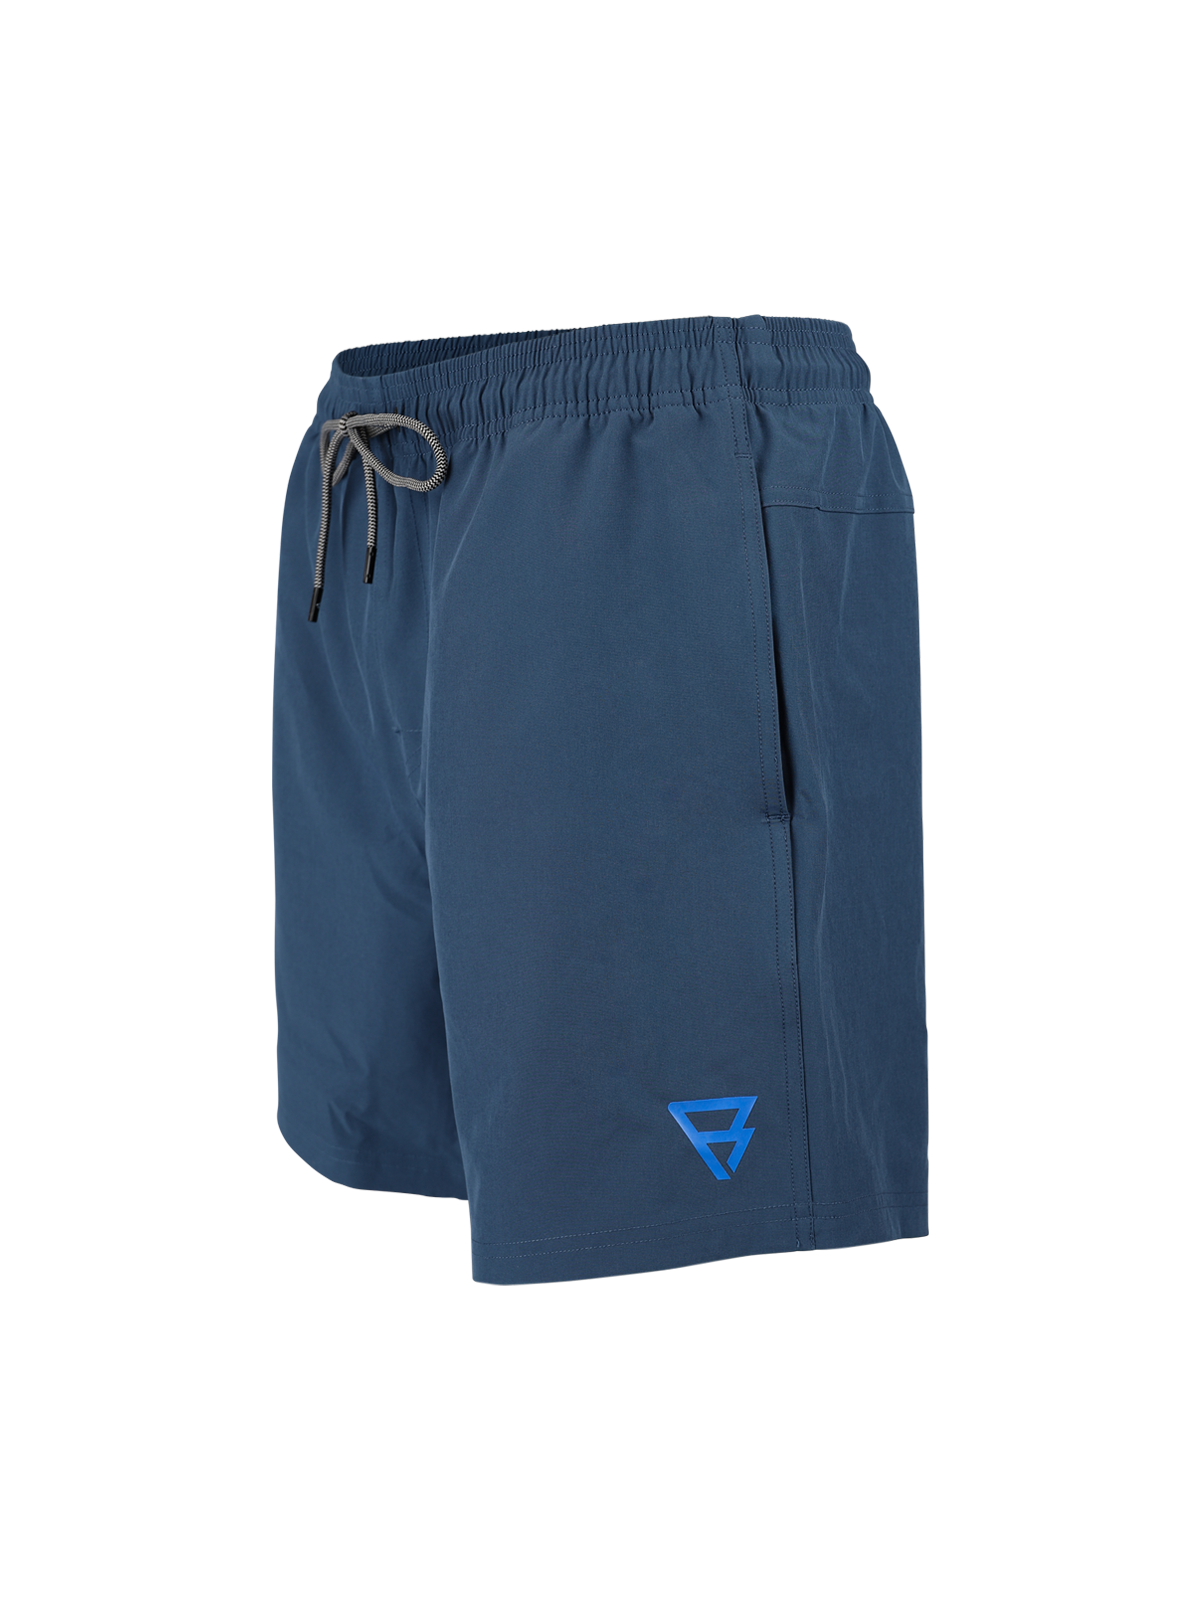 Calaro-R Men Swim Shorts | Blue